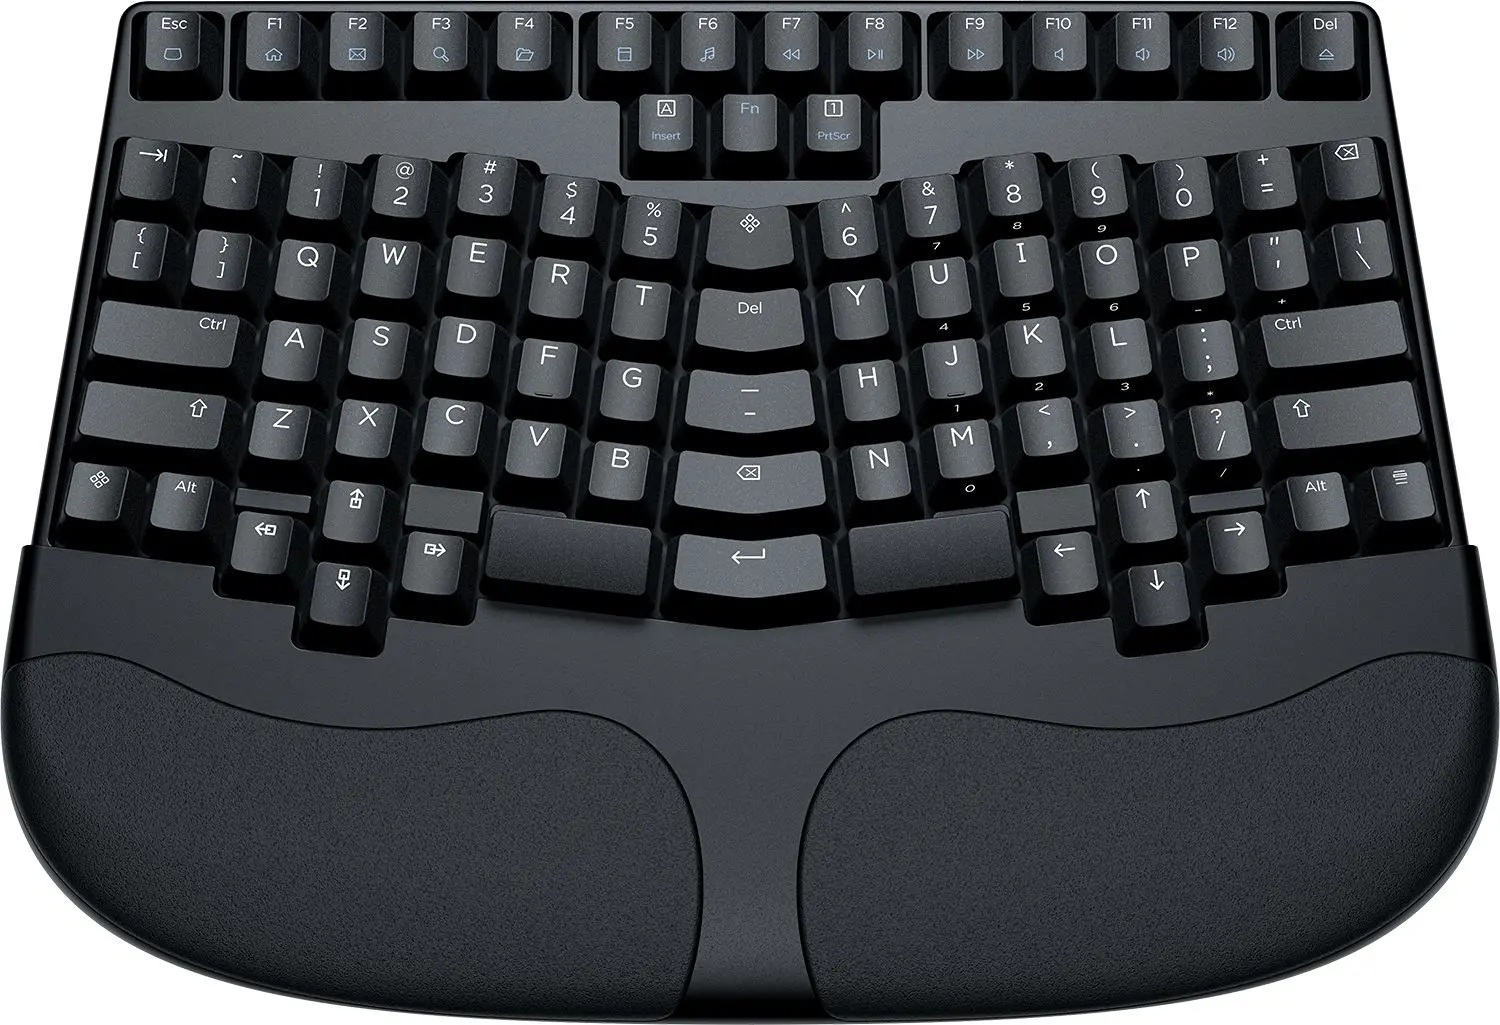 best ergonomic keyboard for macbook air